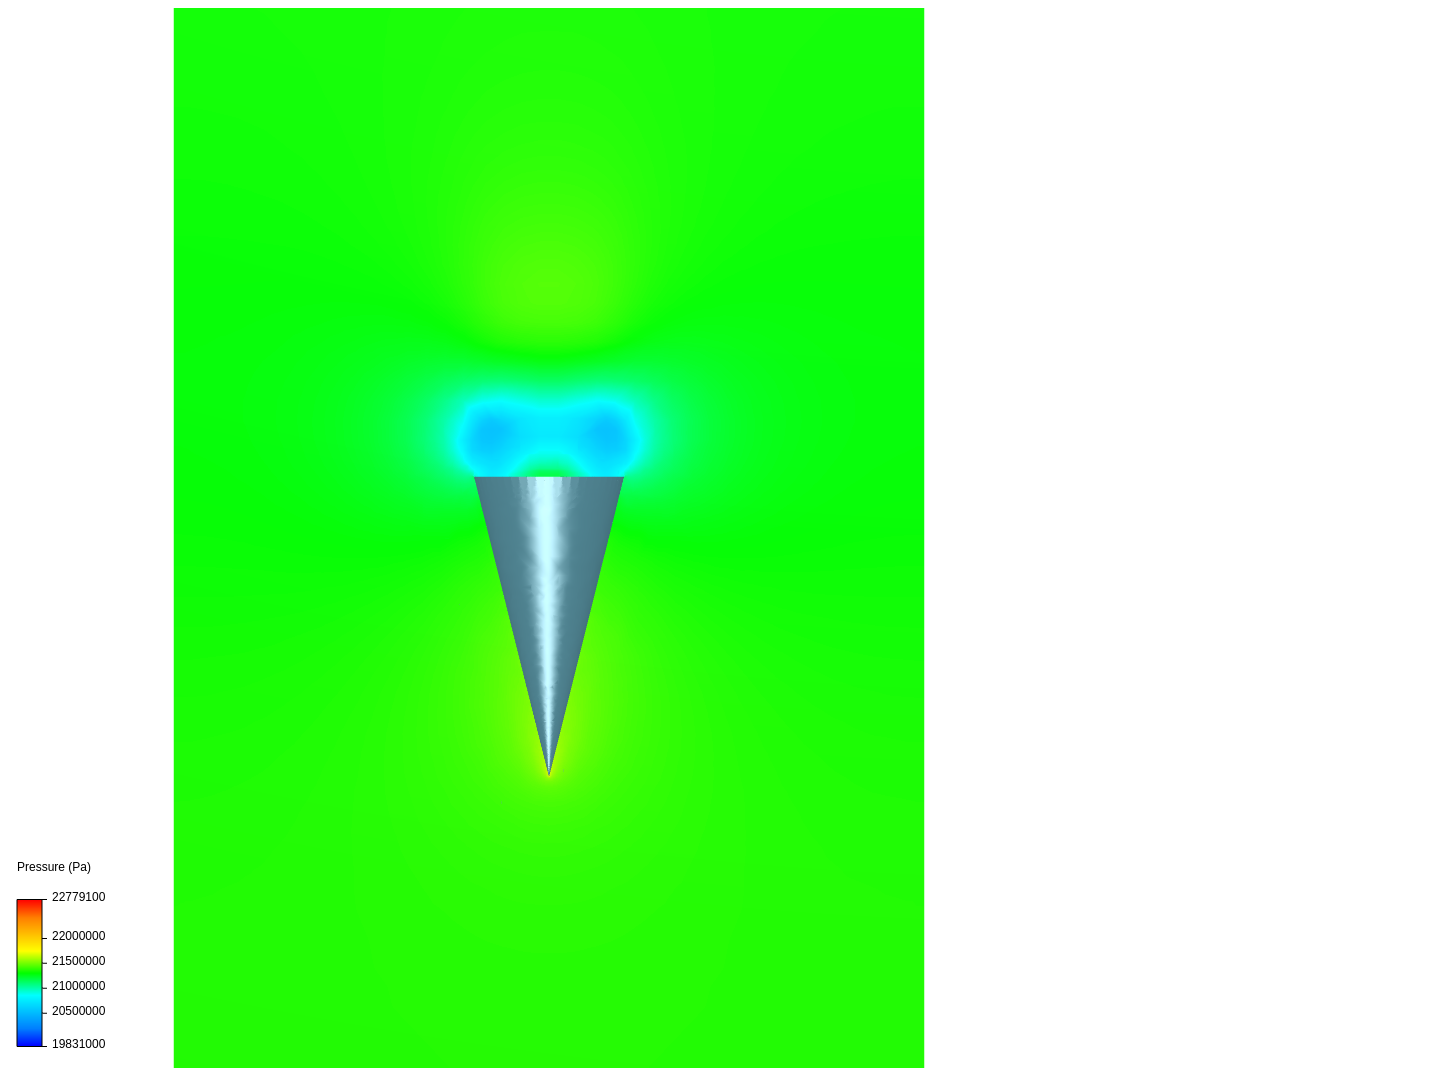 Supersonic flow practice image